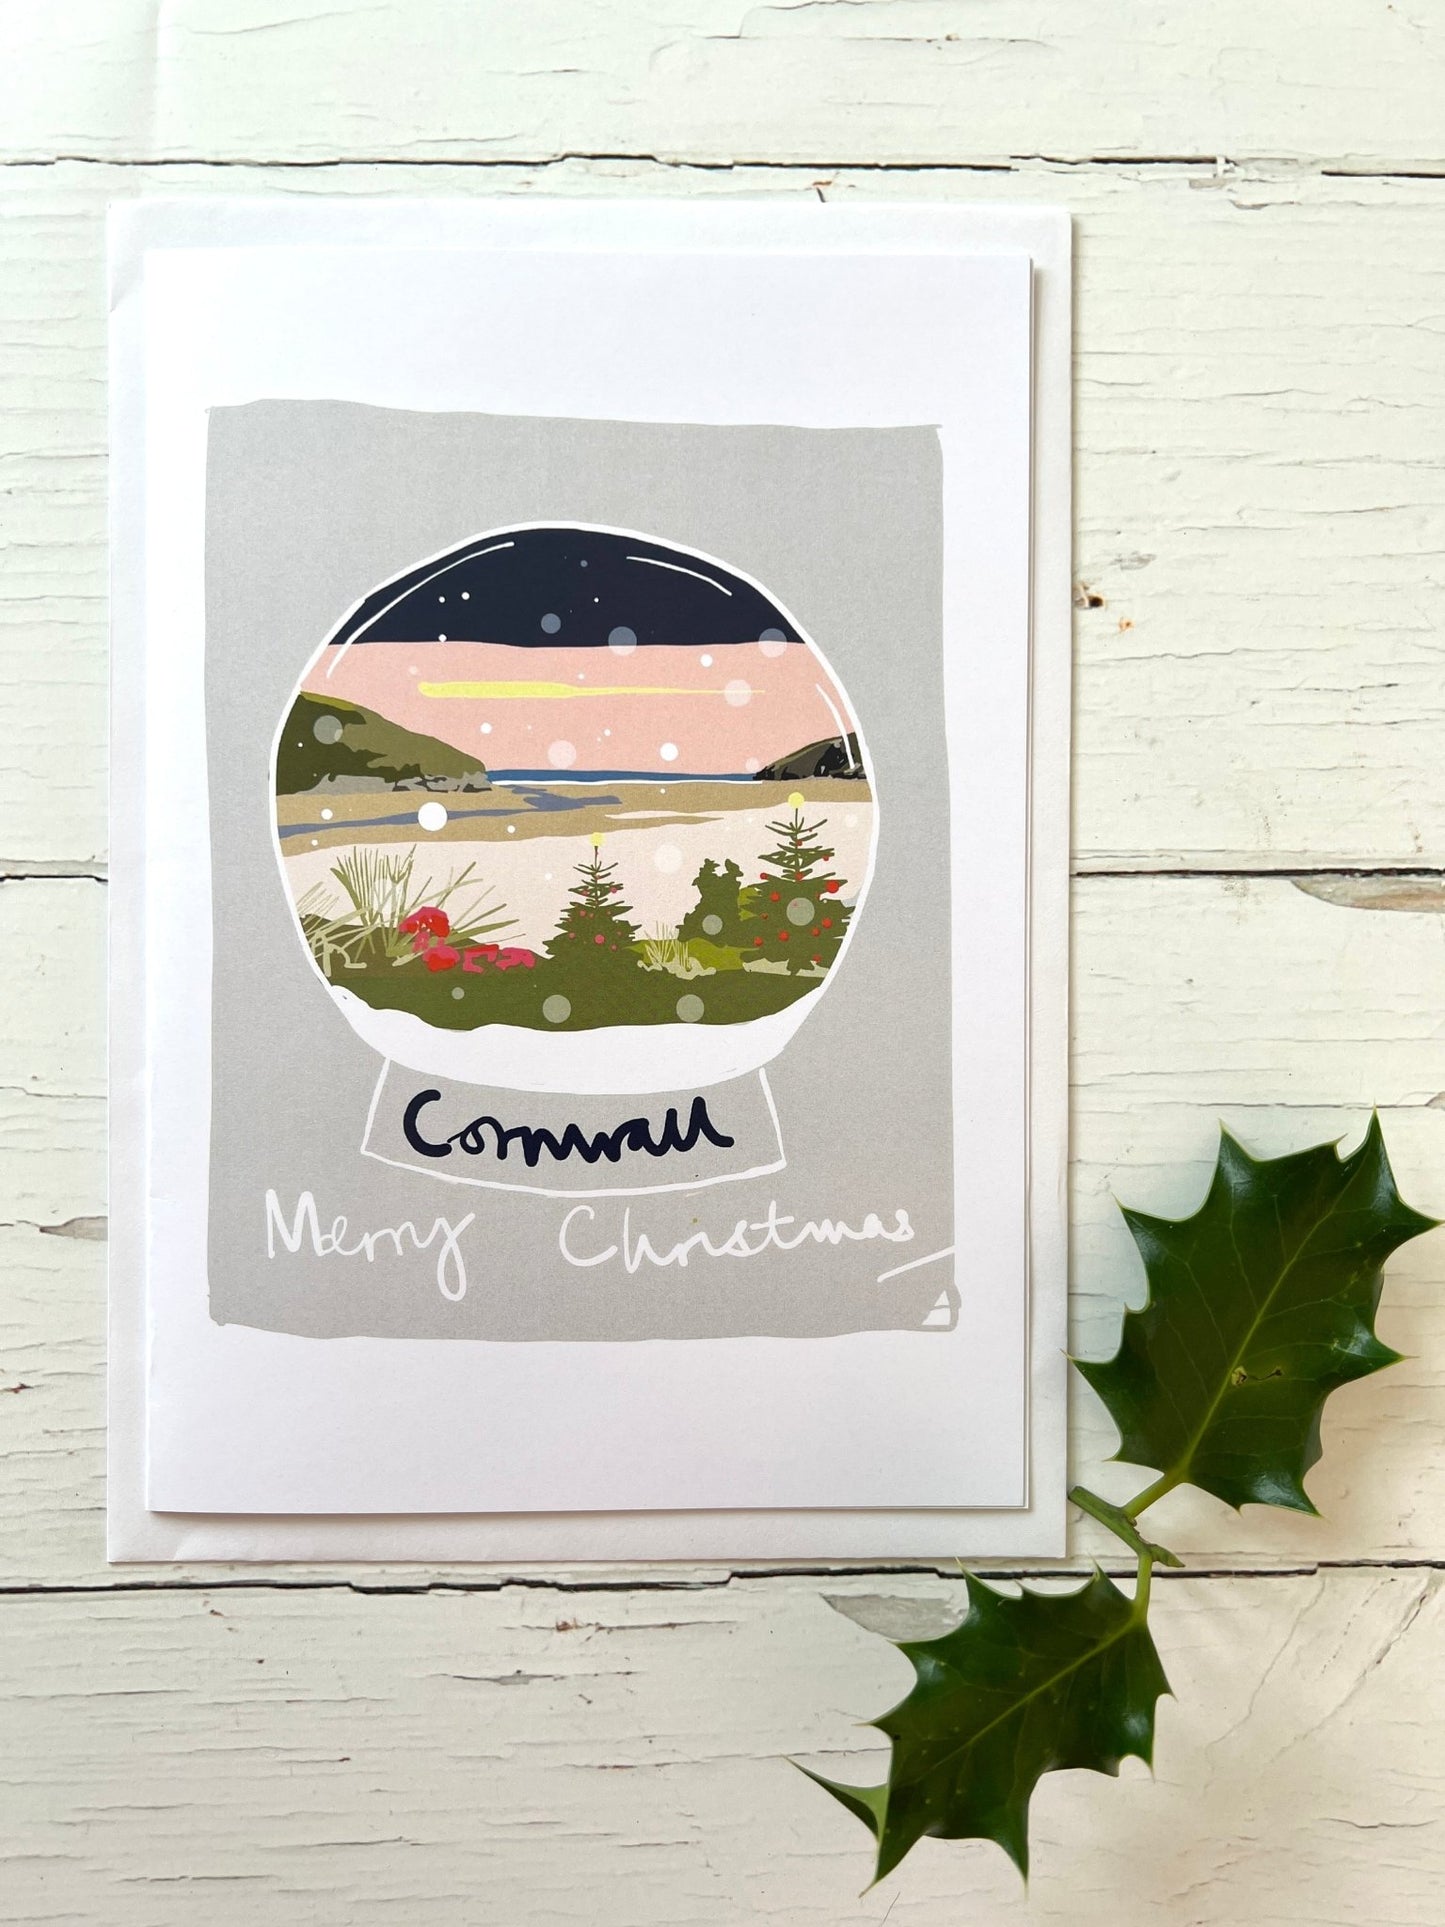 Cornwall Snowglobe Christmas Card - Readymoney Beach Shop